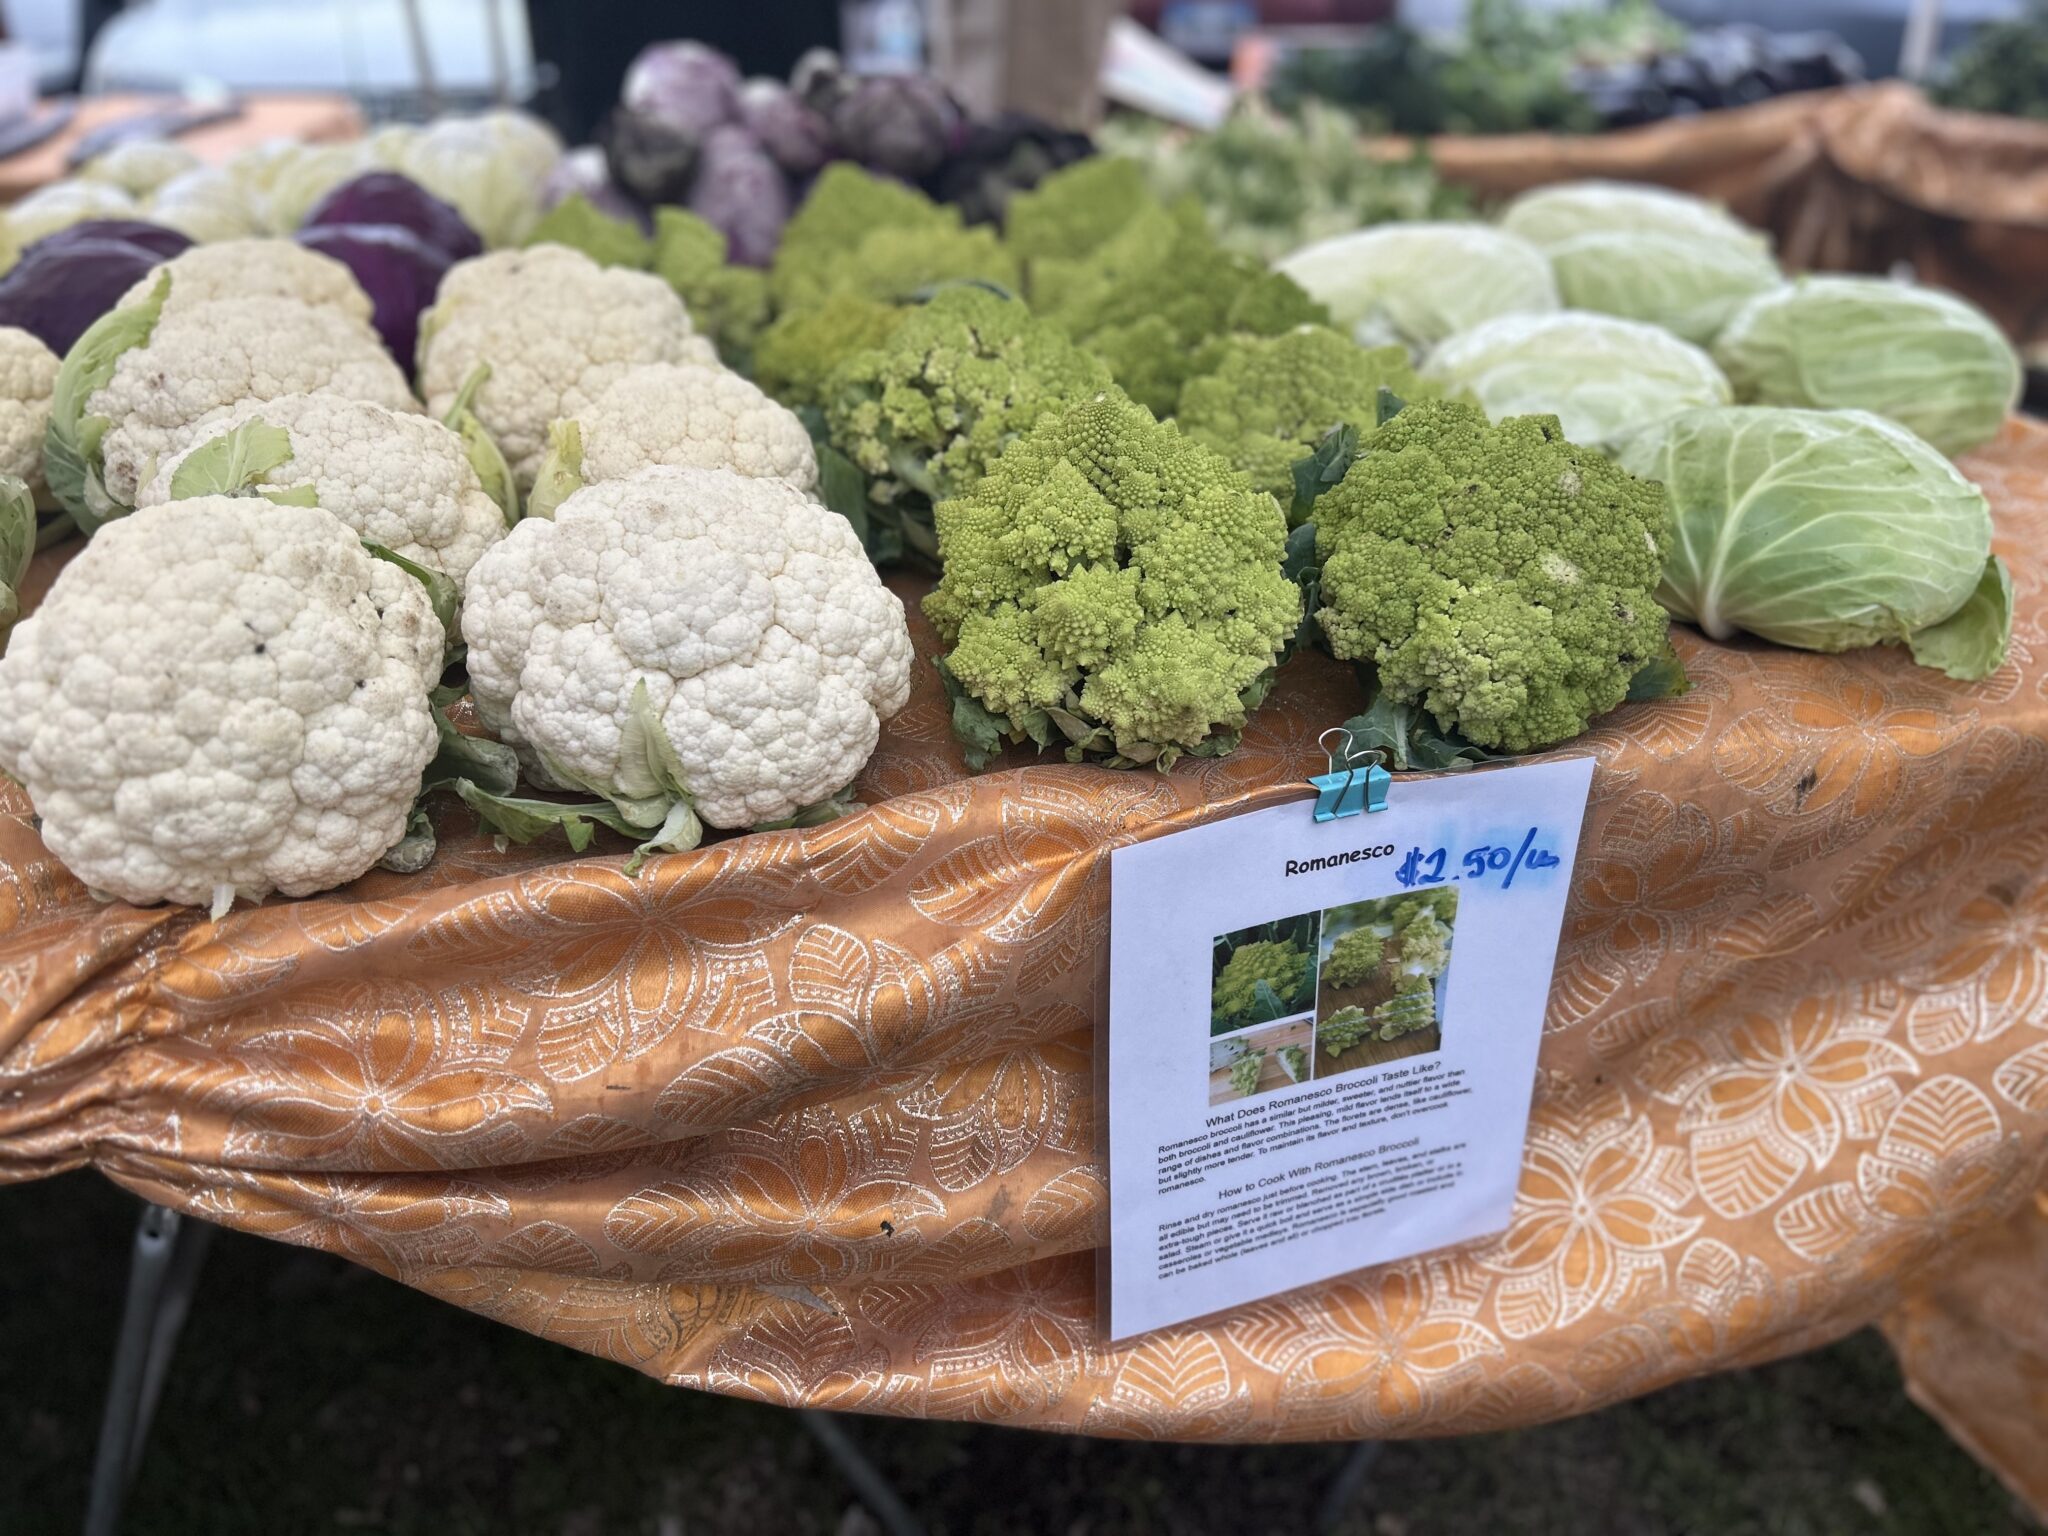 A closeup of farm produce, mostly broccoli and cauliflower.